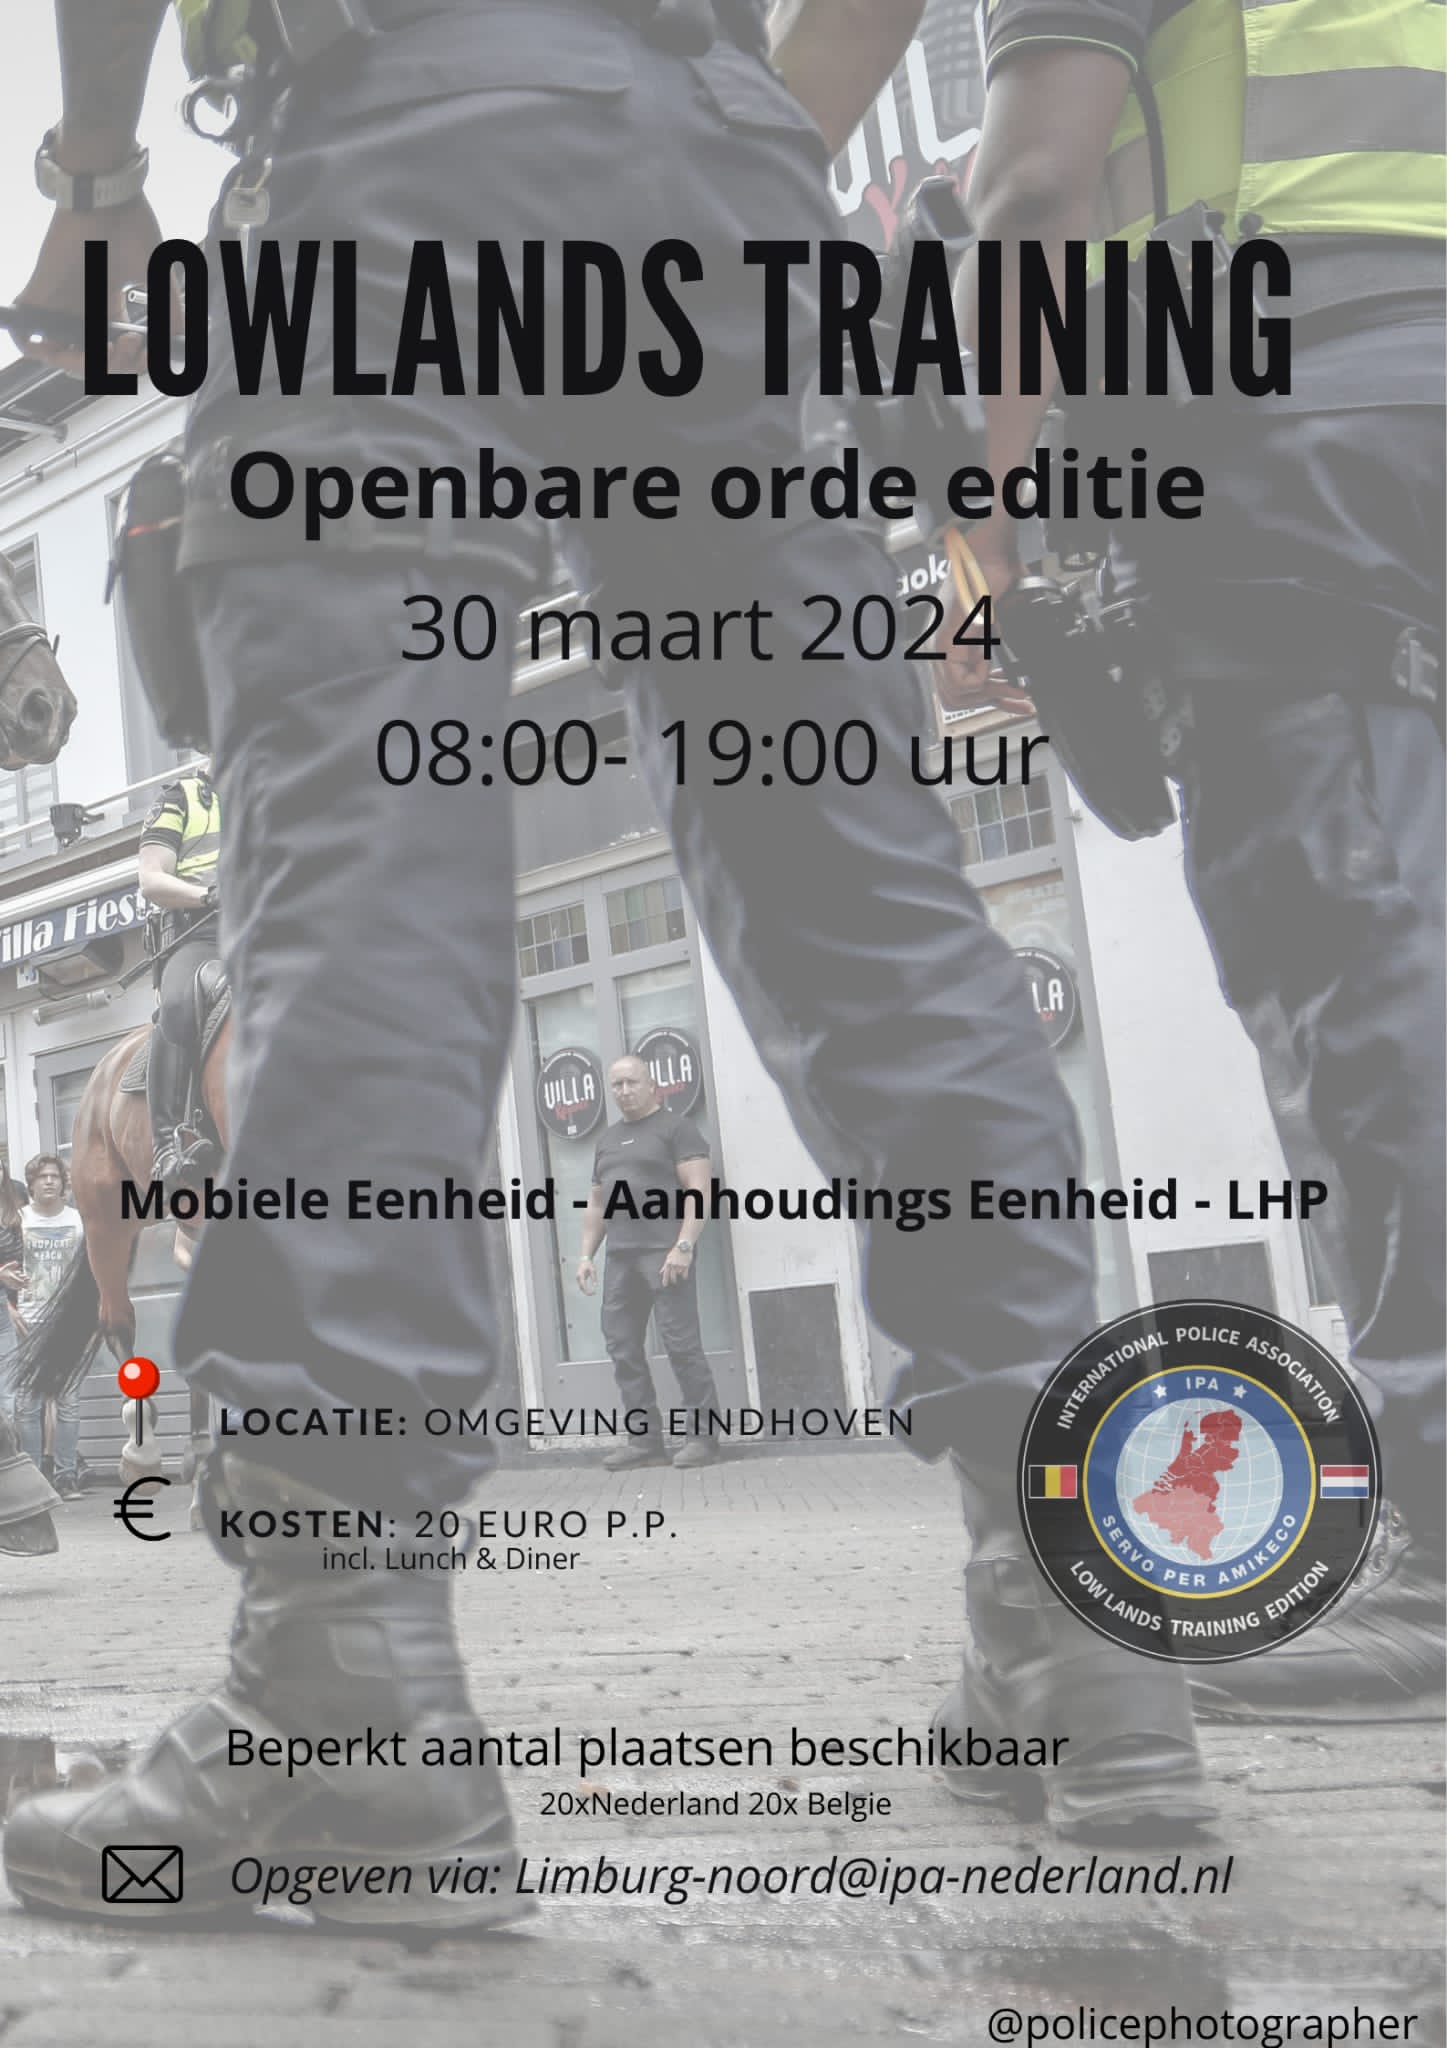 Lowlands training